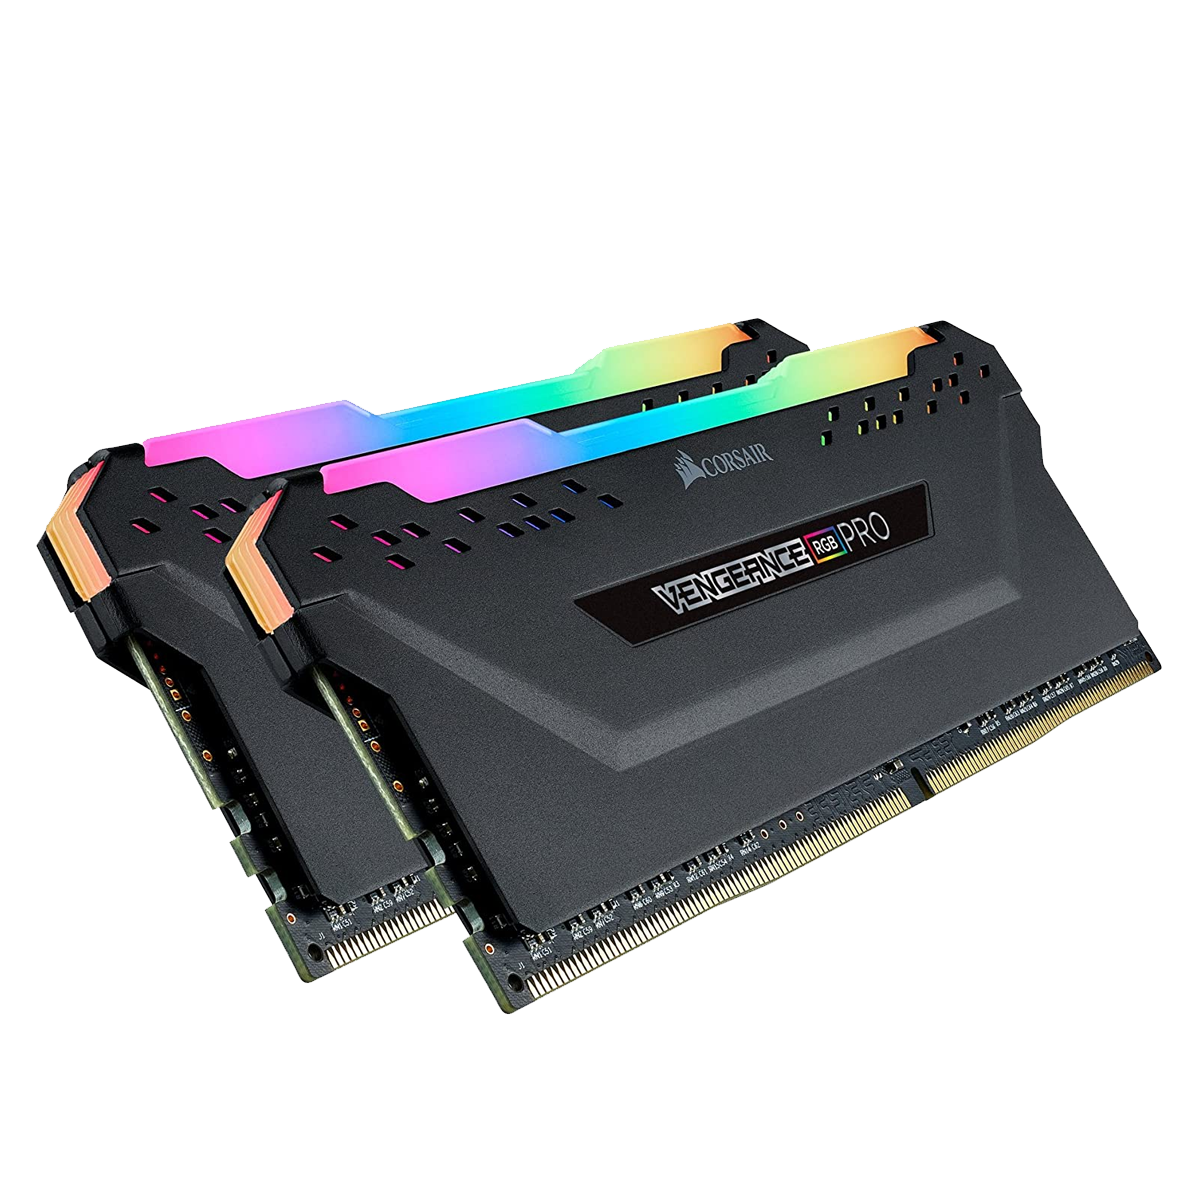 Corsair Vengeance RGB PRO 16GB (2 x 8GB) DDR4 DRAM 3200MHz  Memory Kit — Black